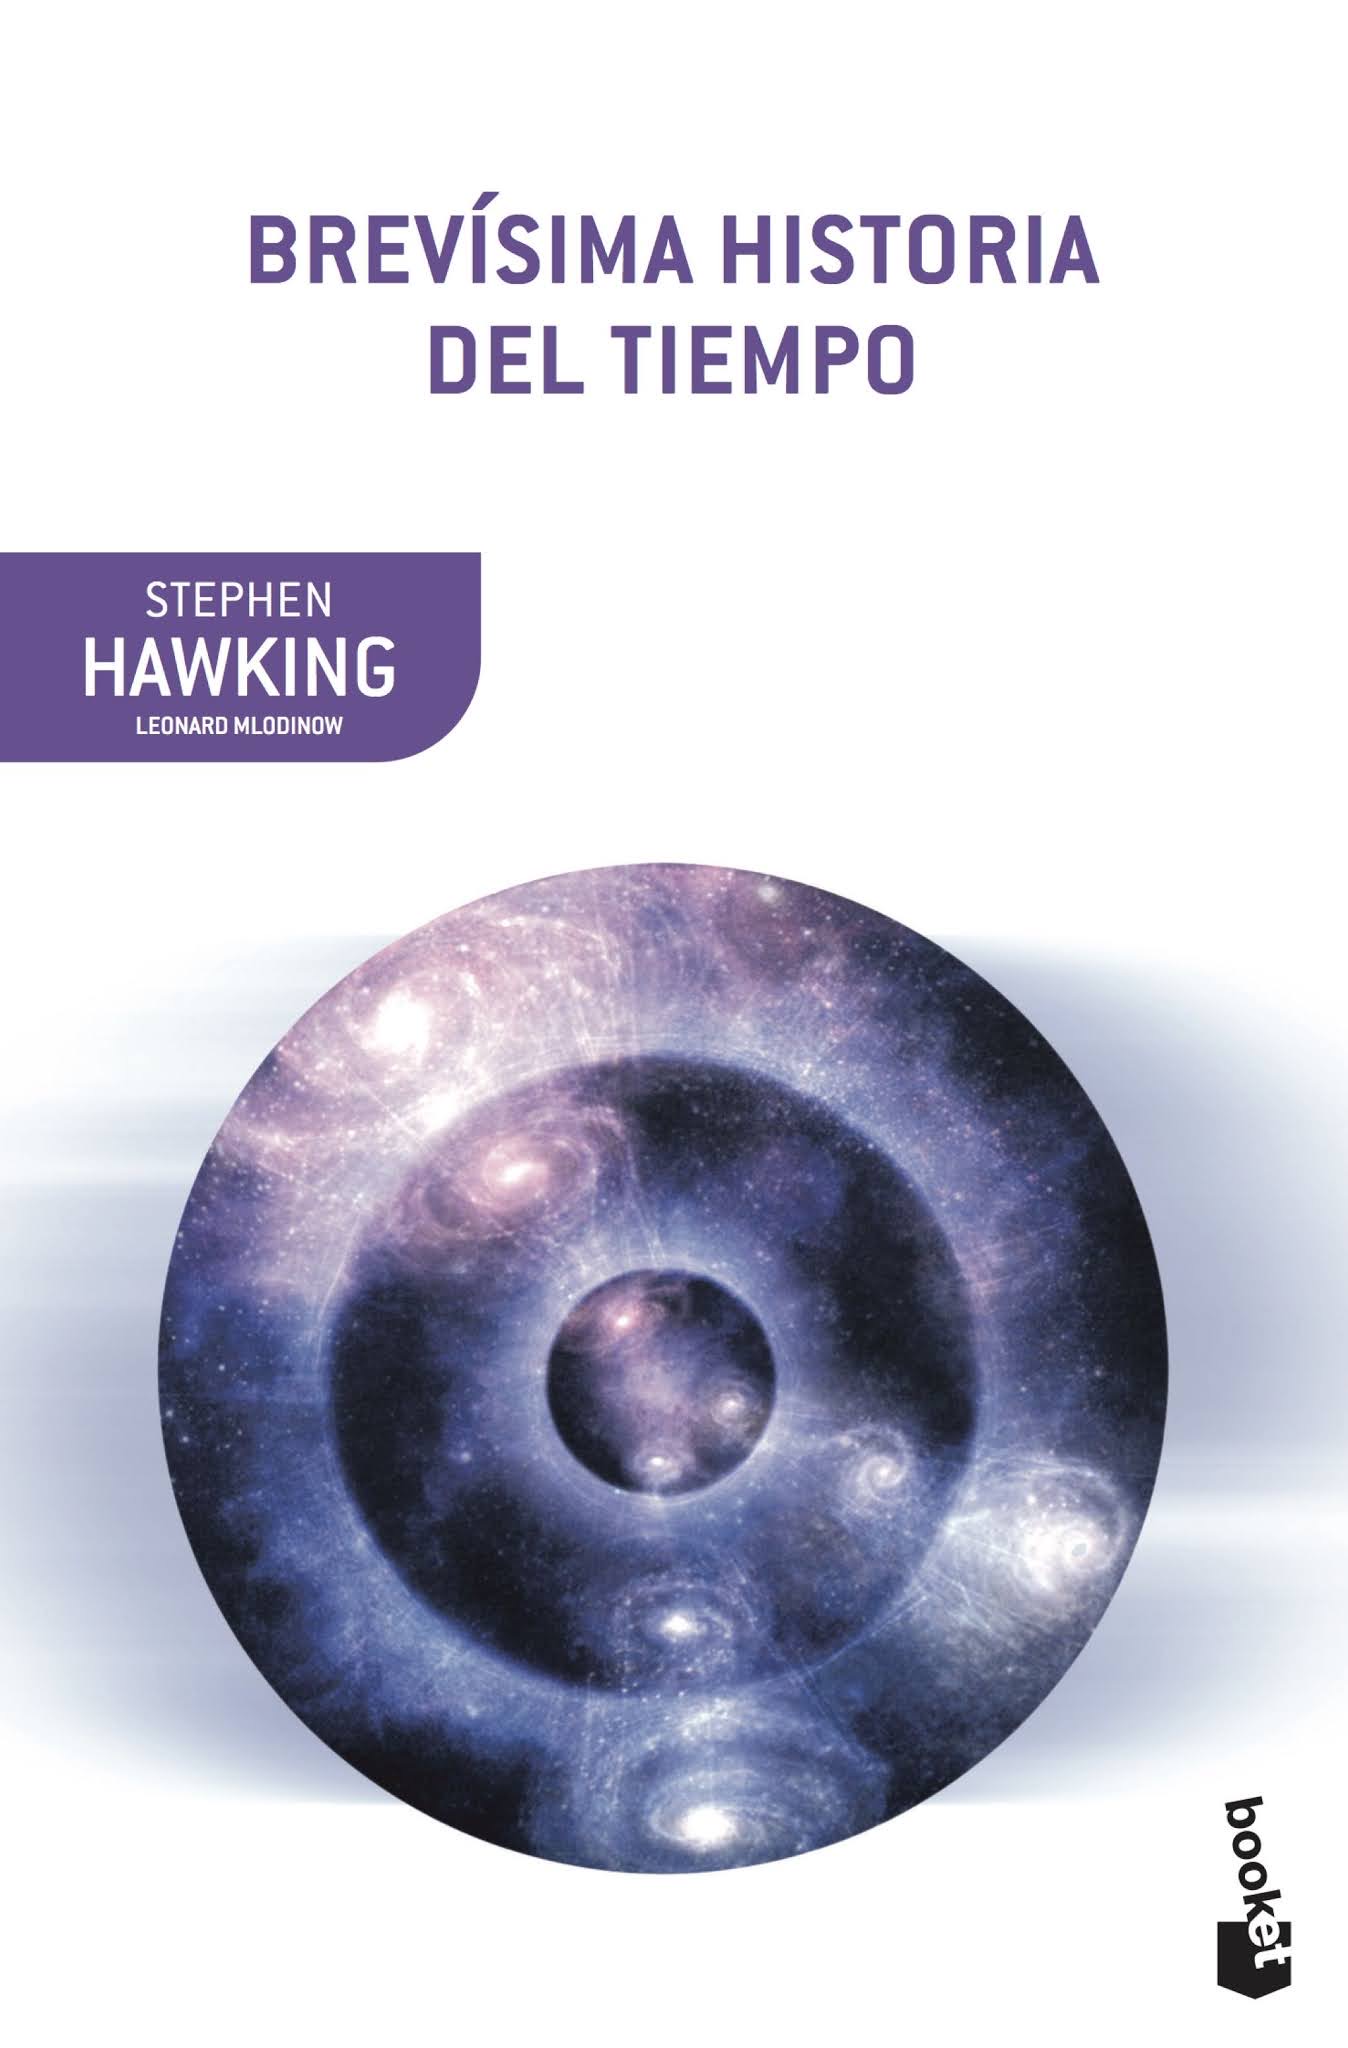 Stephen Hawking, Leonard Mlodinow: Brevísima historia del tiempo (Spanish language, 2005, Critica (Grijalbo Mondadori))